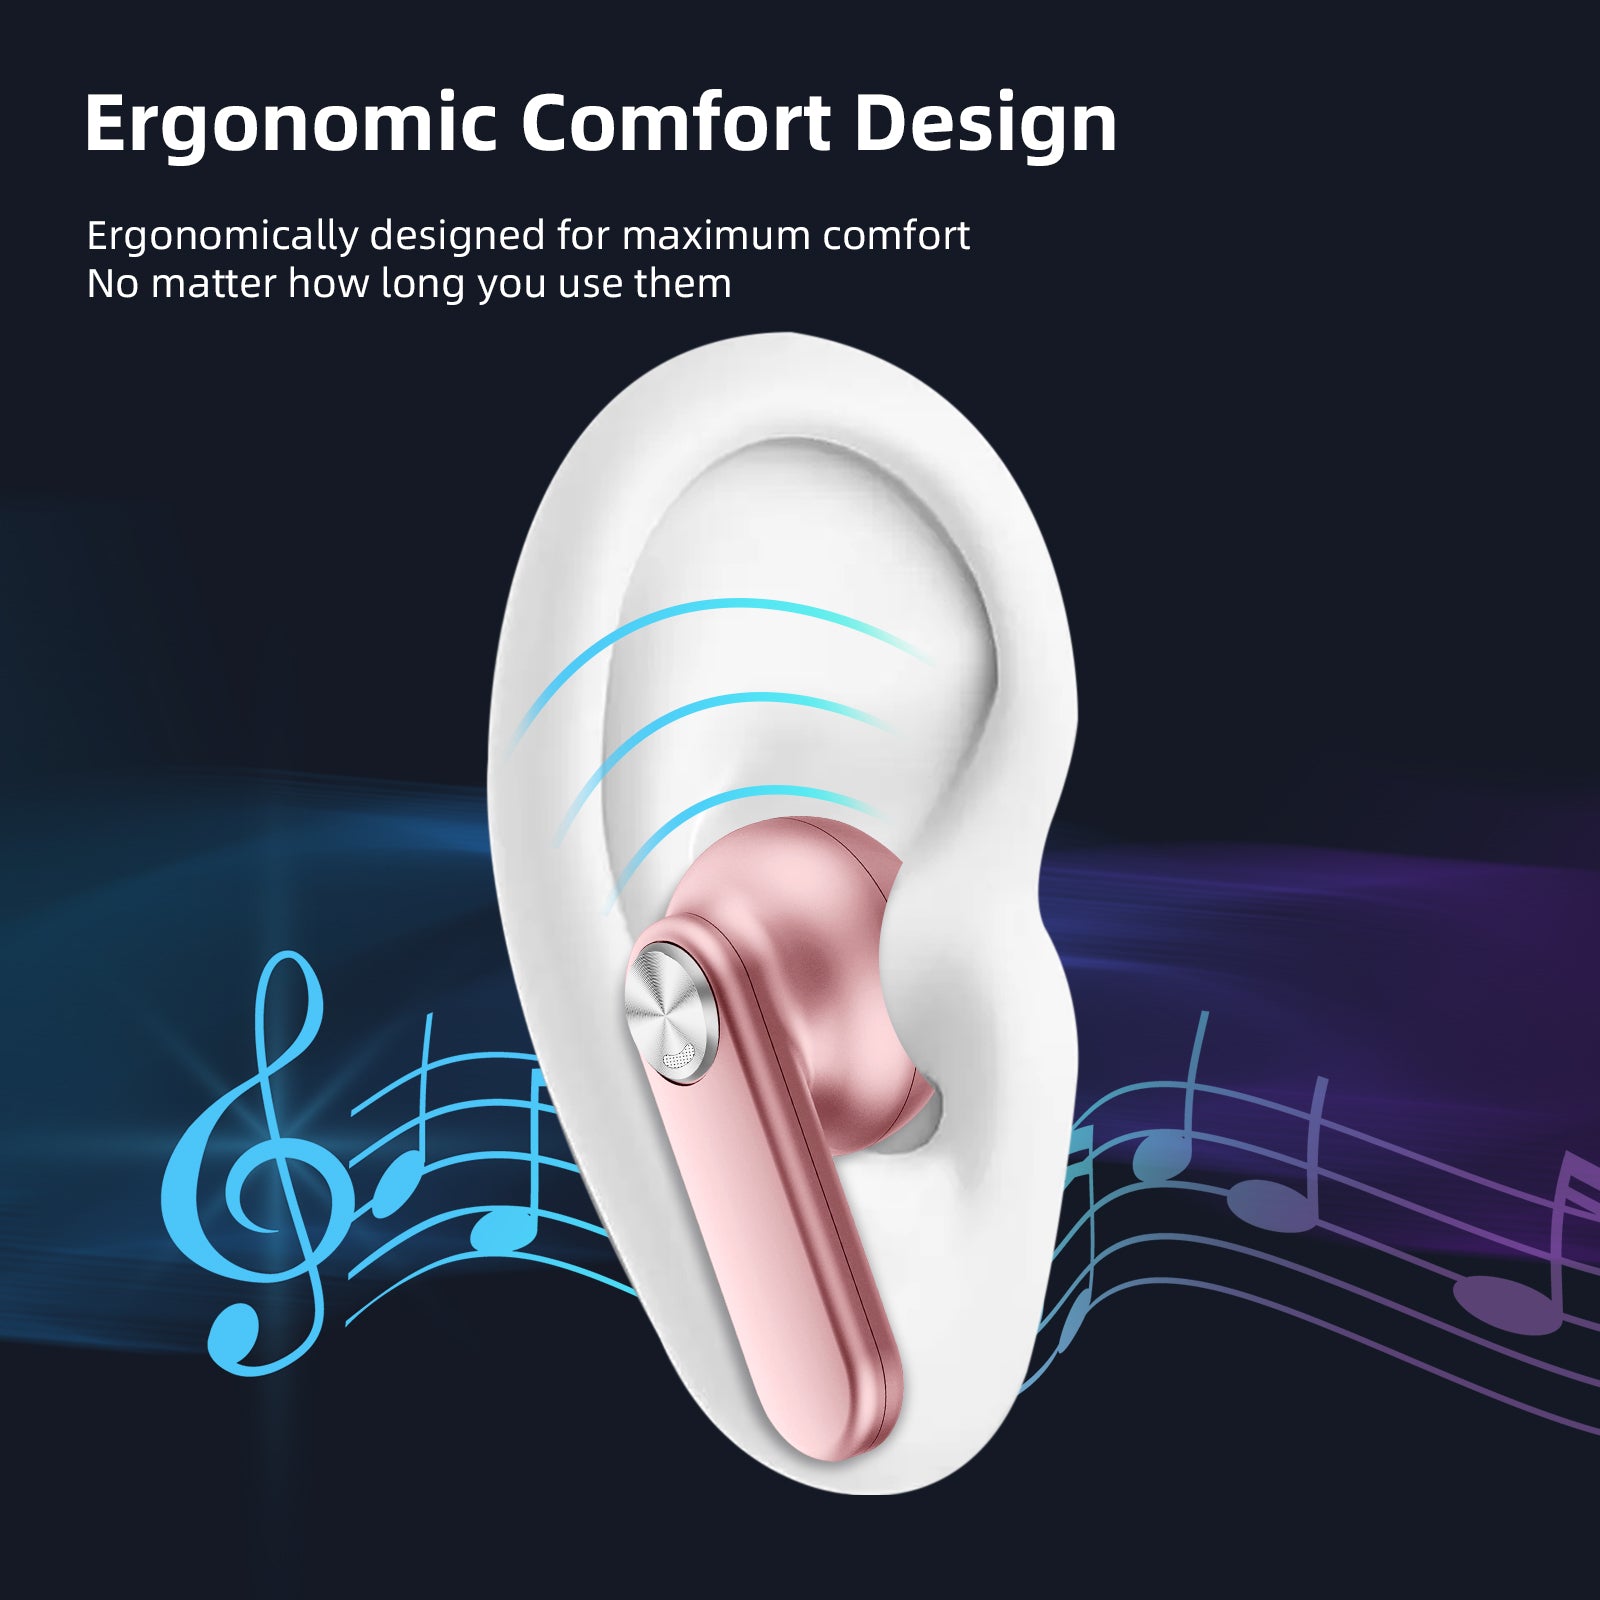 T2 wireless Bluetooth earphones are ergonomically designed to provide maximum comfort. 